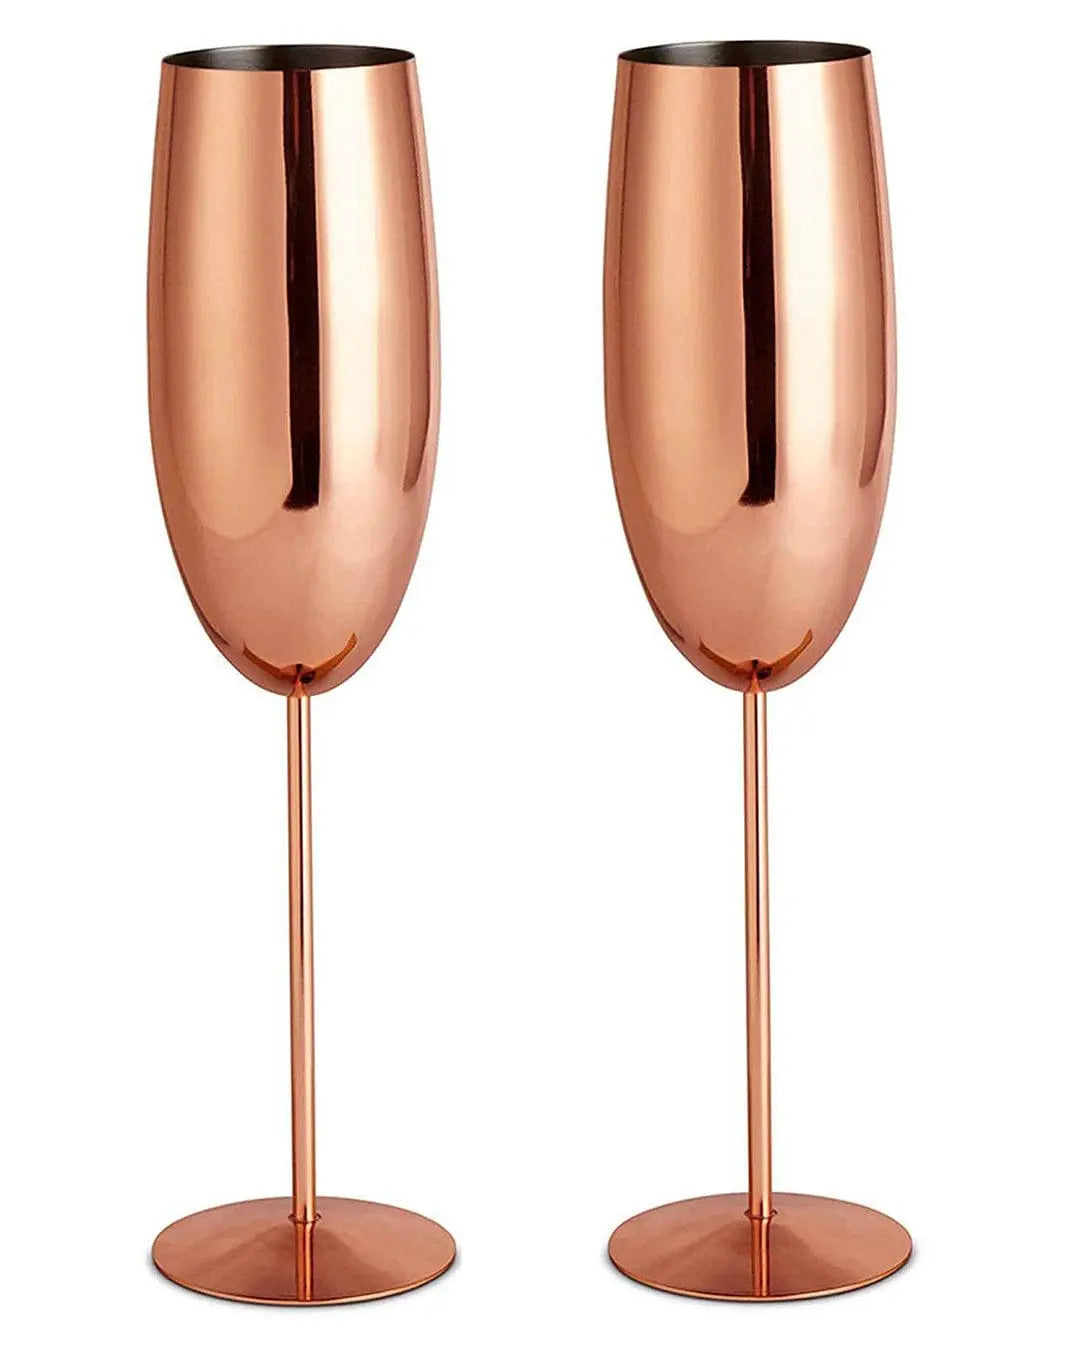 VonShef/Beautify Copper Champagne Flutes Tableware